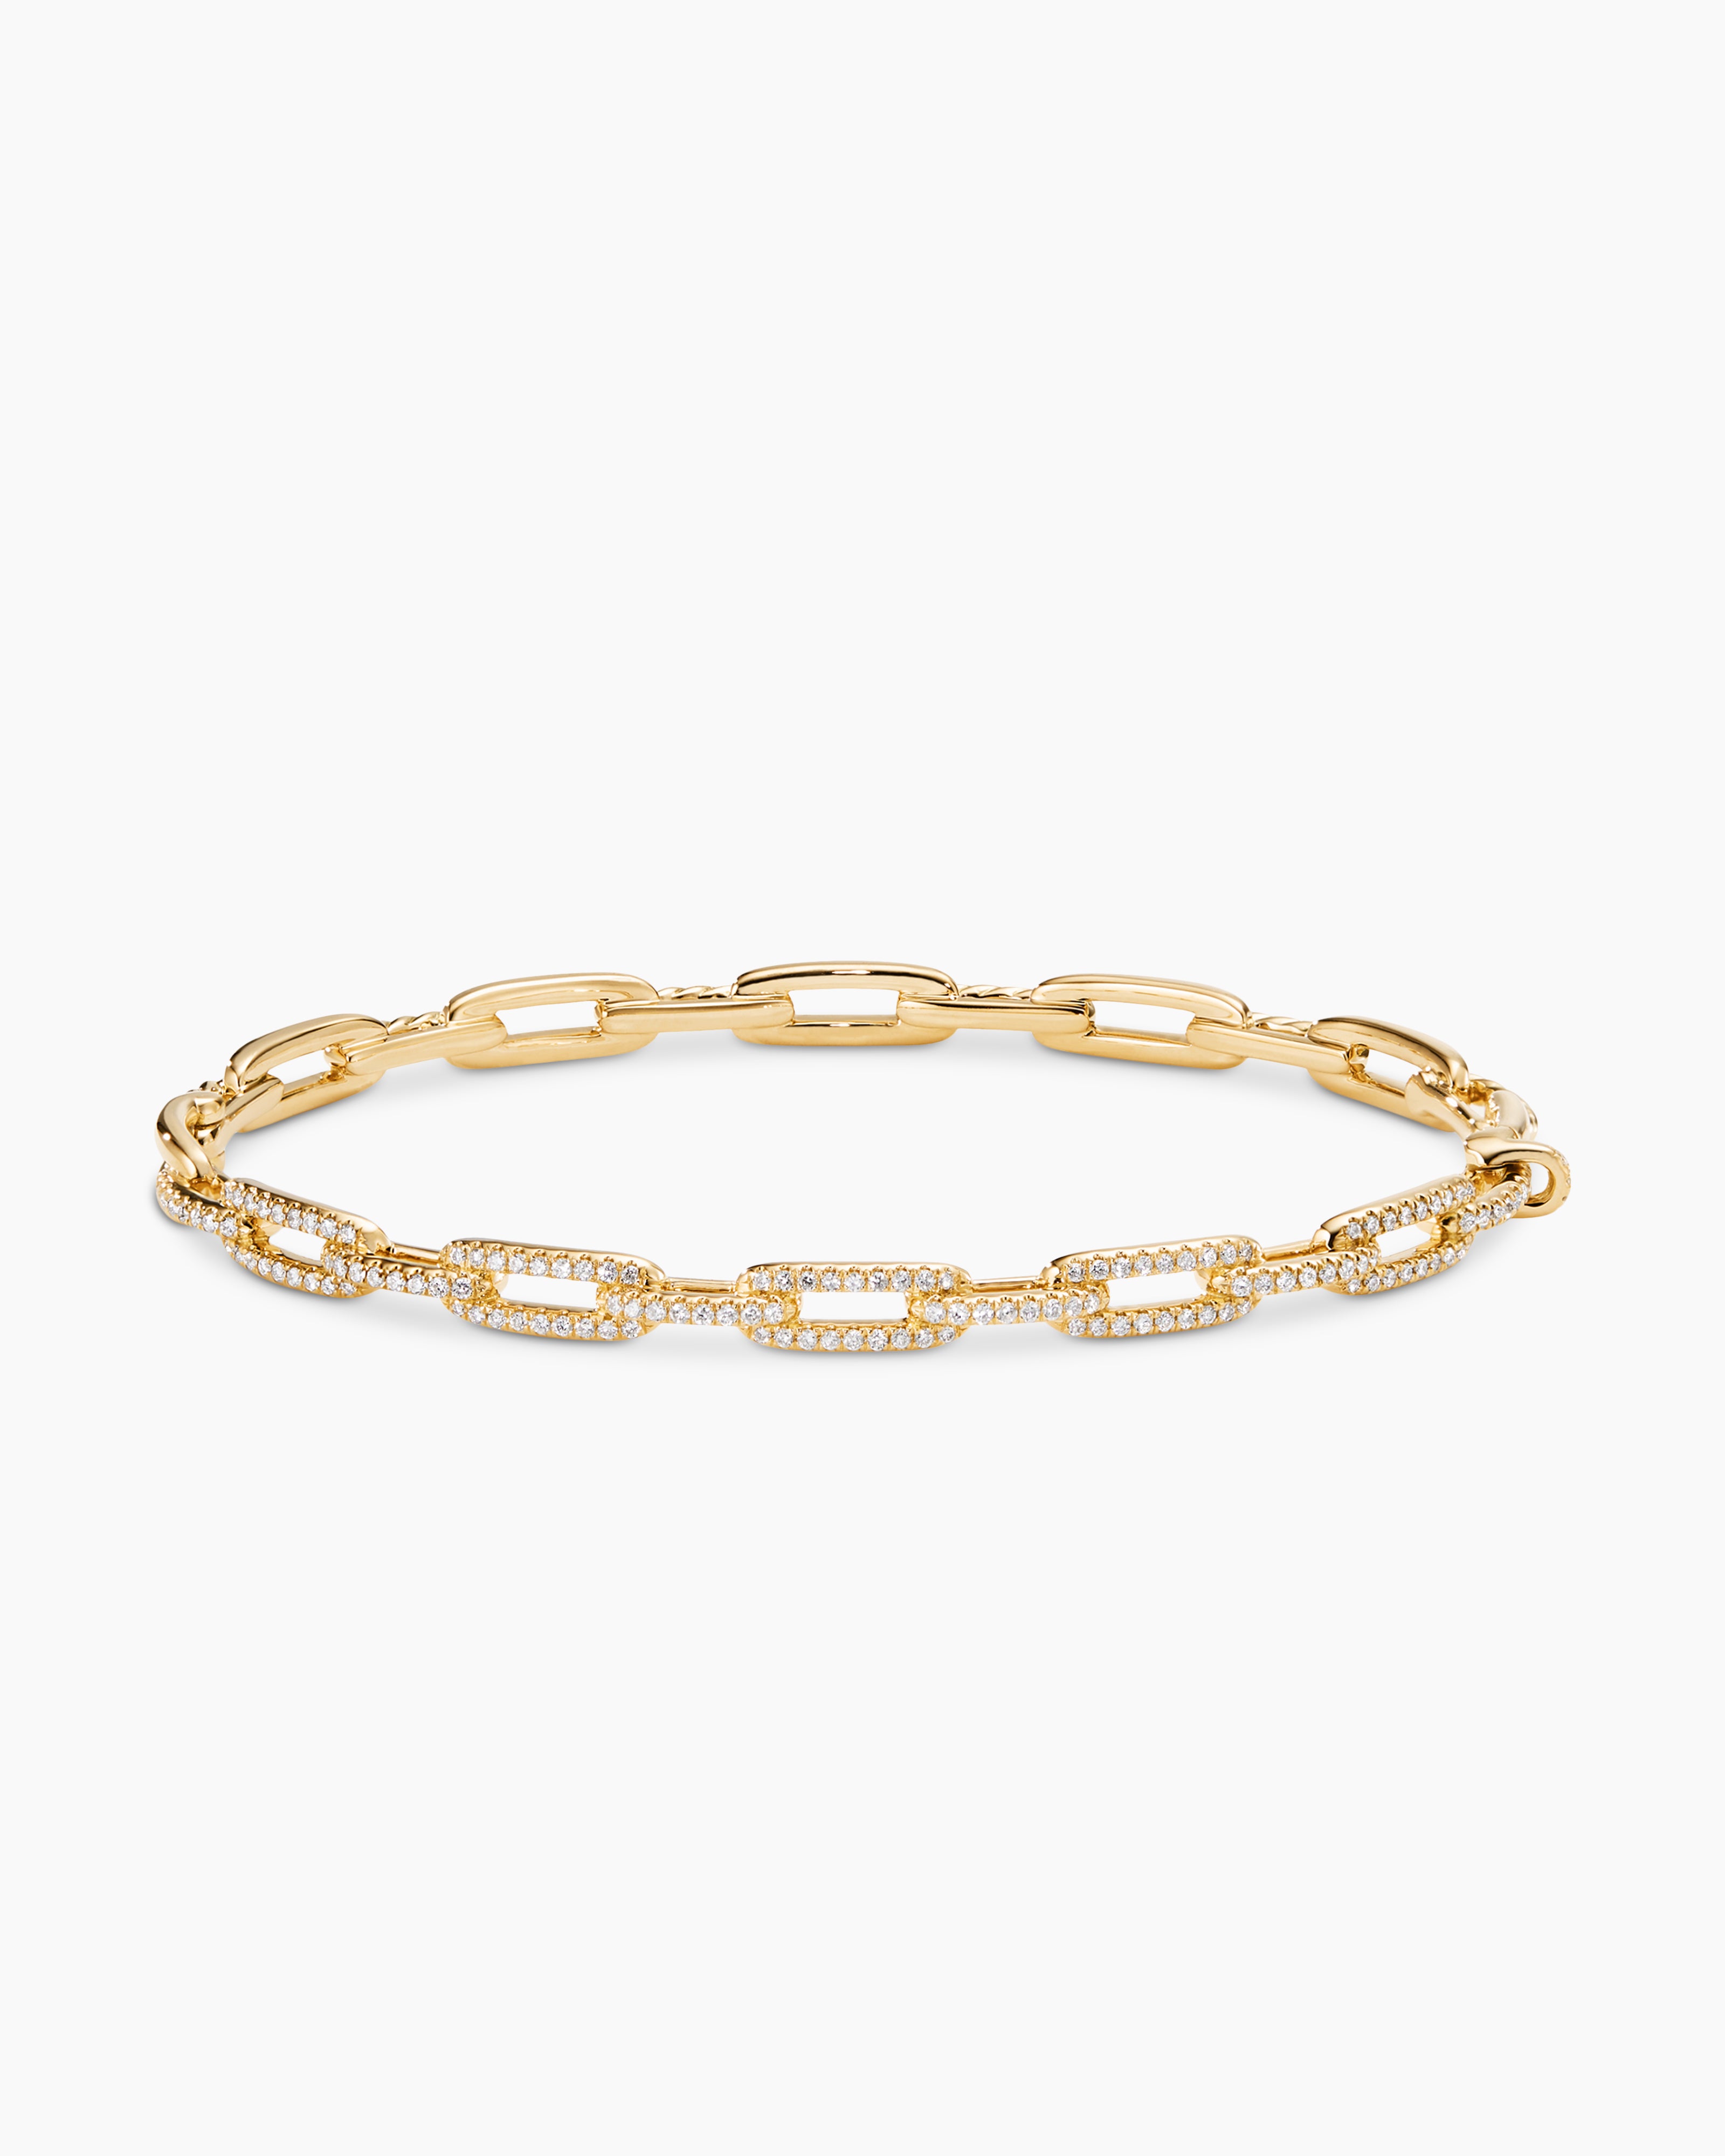 David Yurman Stax Chain Link Bracelet with Diamonds in 18K Gold